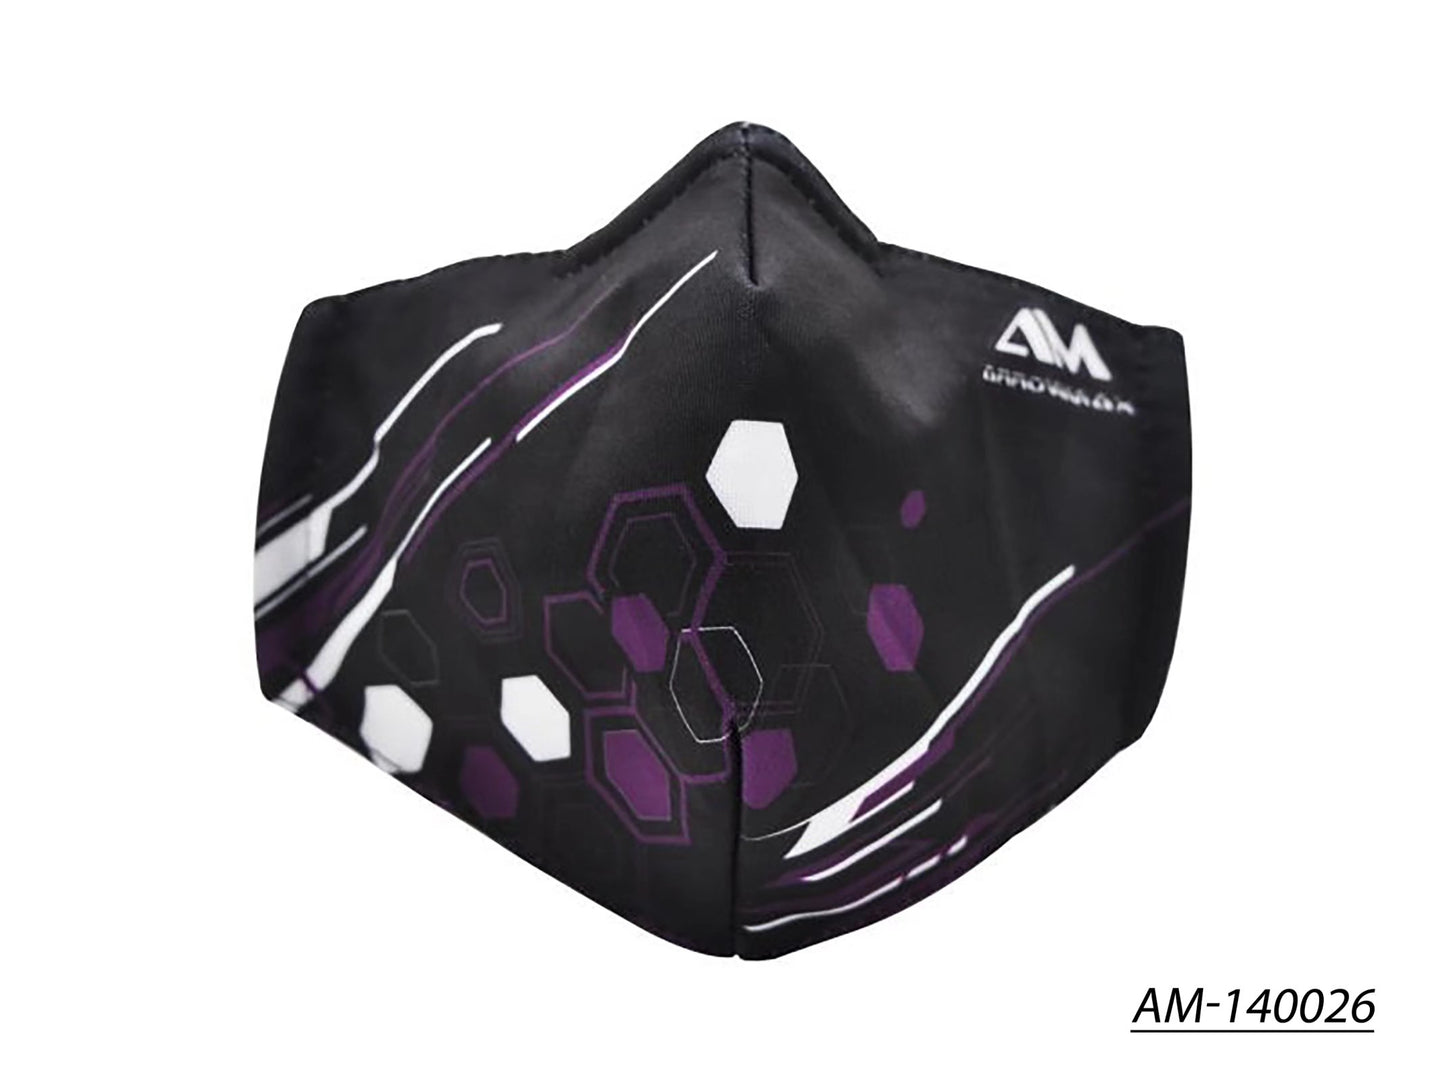 AM Safety Mask  (AM-140026)